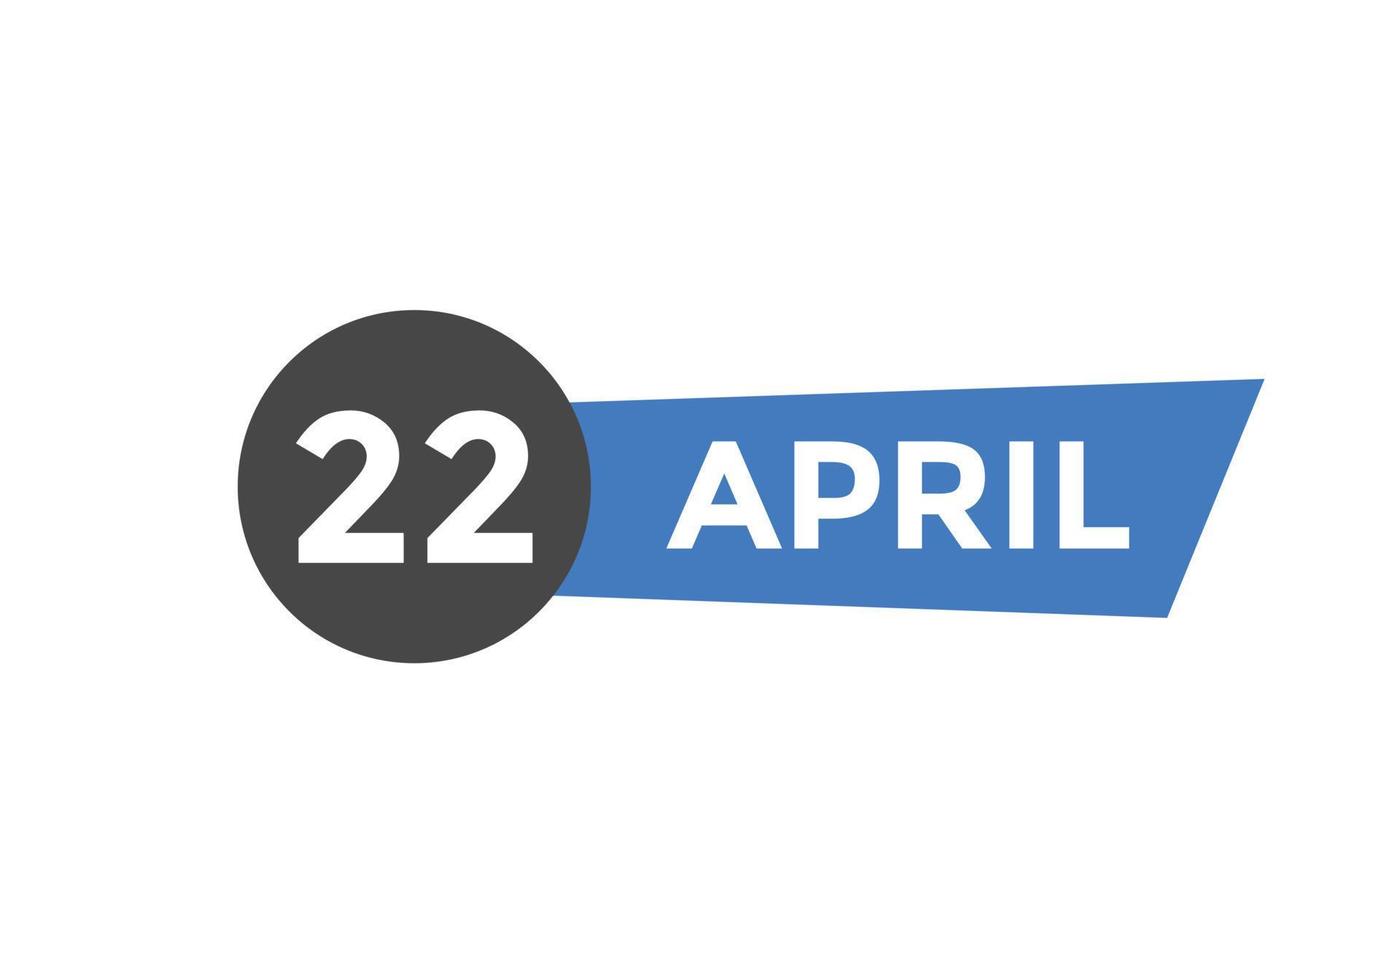 april 22 calendar reminder. 22th april daily calendar icon template. Calendar 22th april icon Design template. Vector illustration